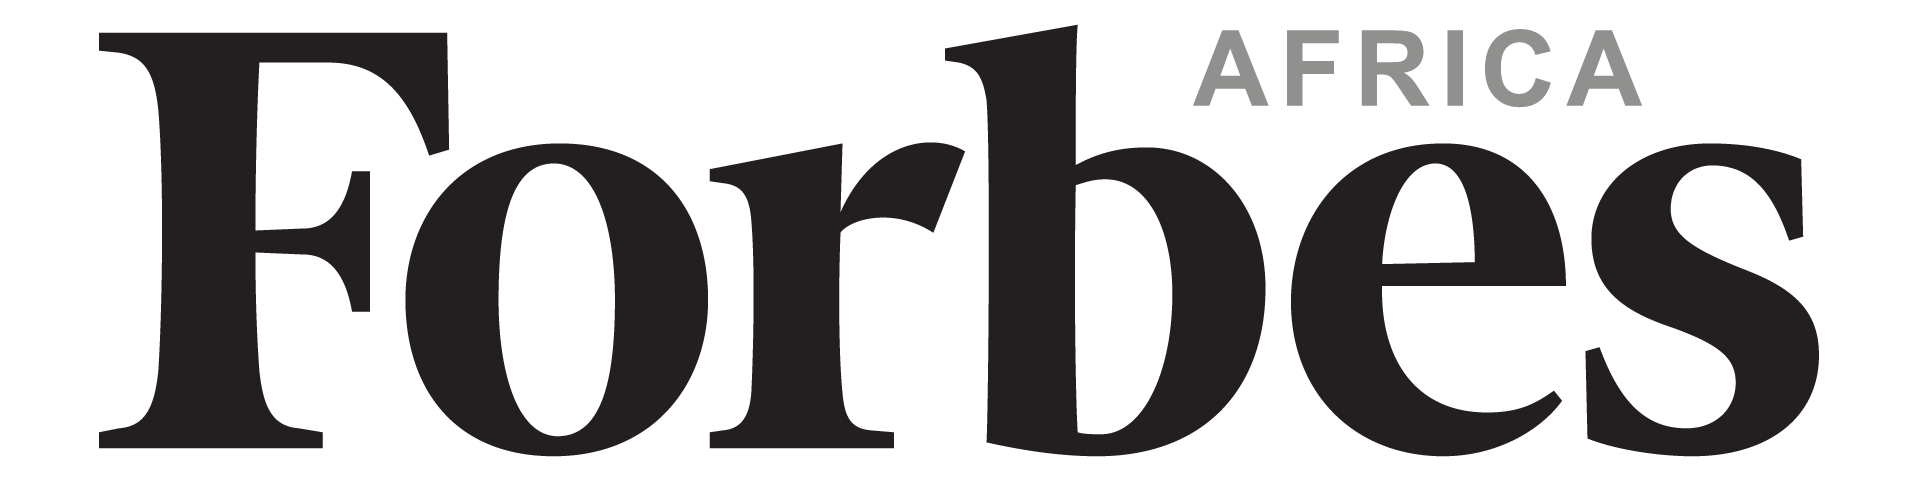 Forbes Africa - 미디어 - 출판사